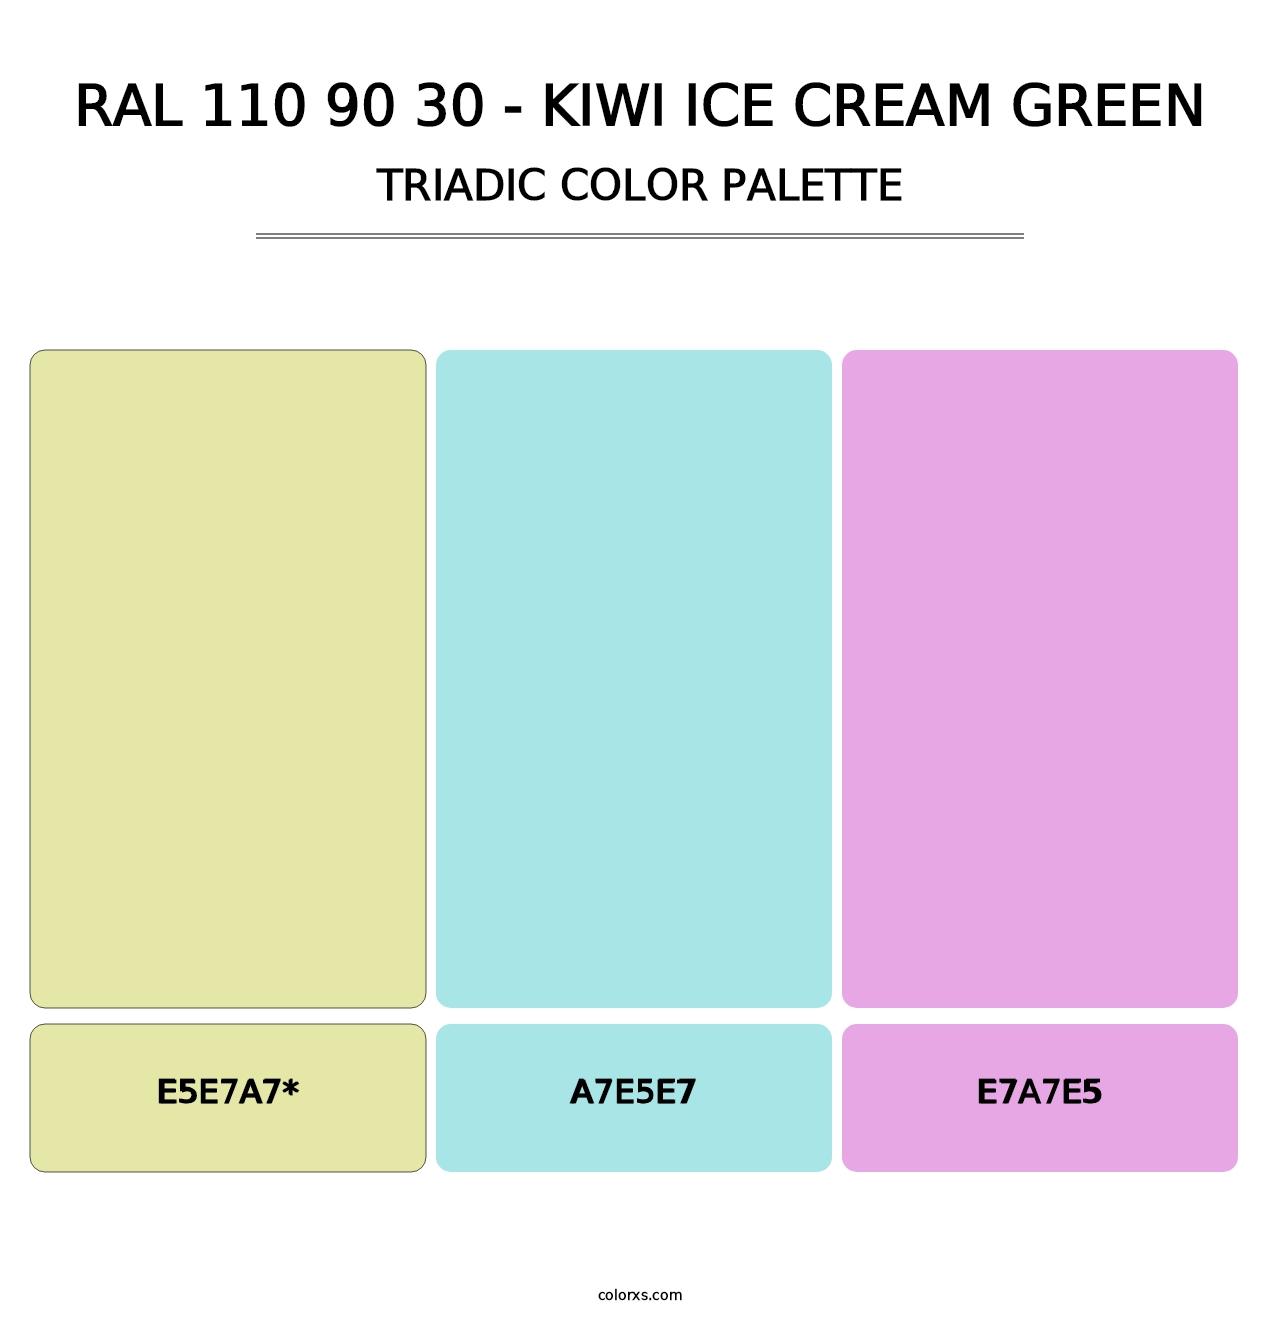 RAL 110 90 30 - Kiwi Ice Cream Green - Triadic Color Palette